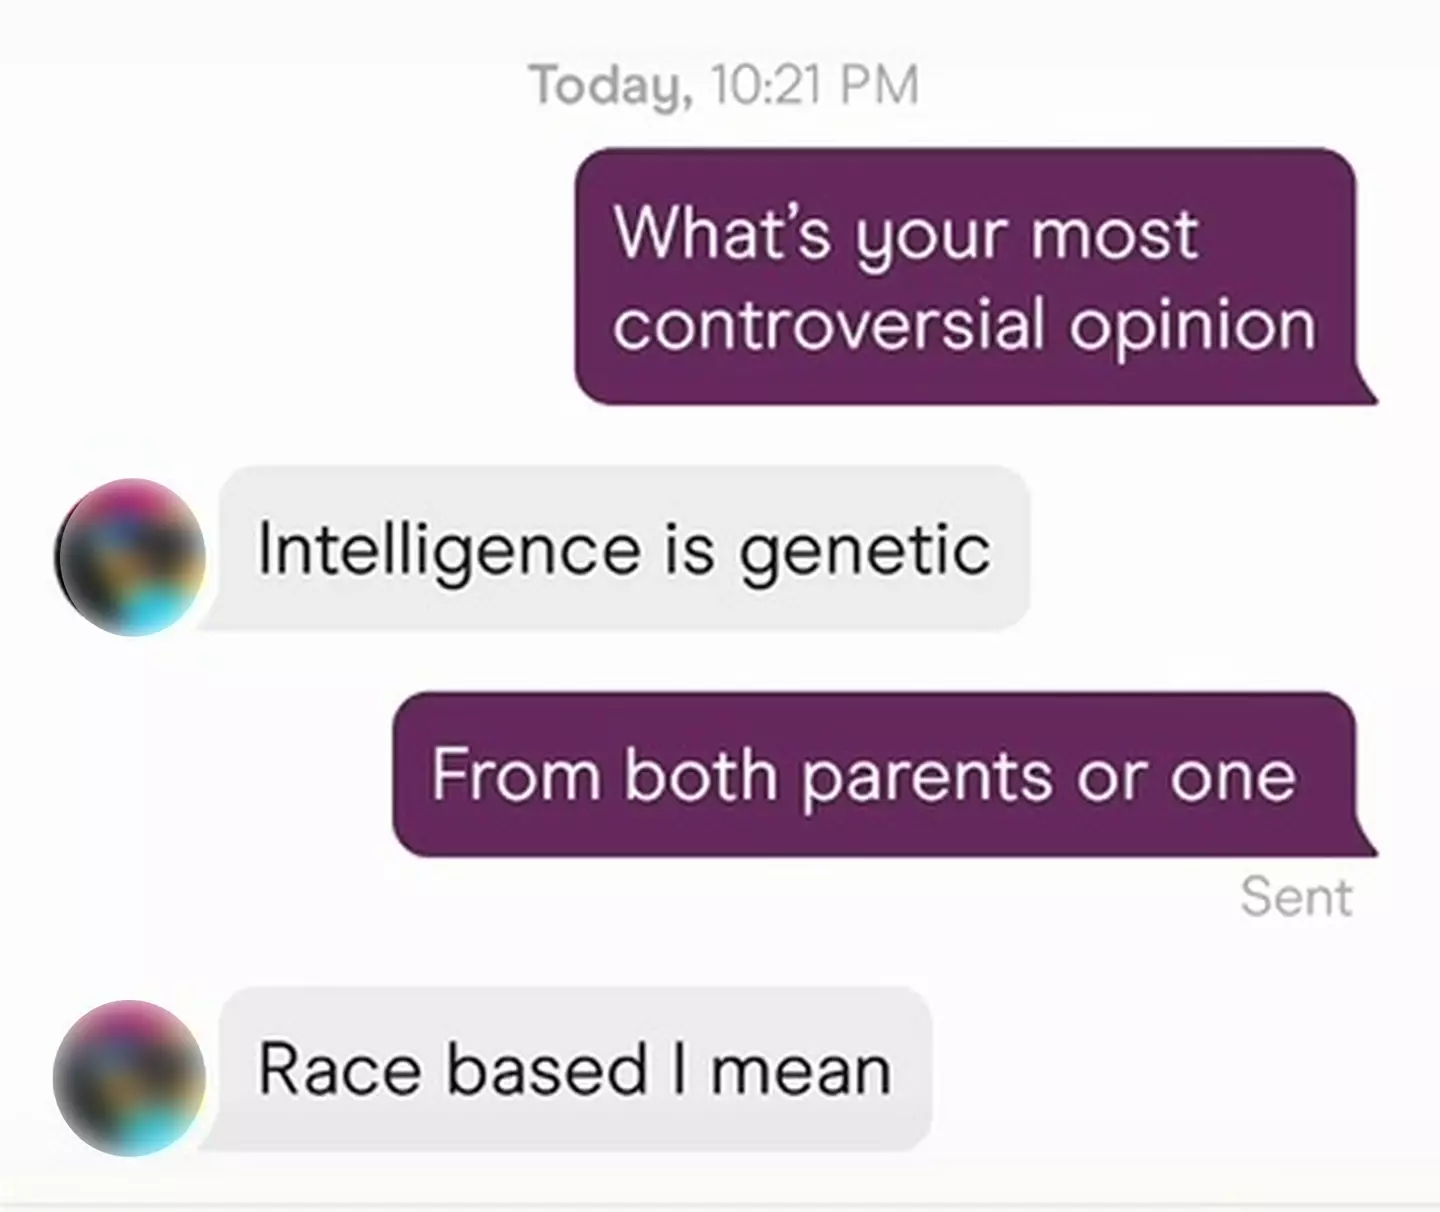 One man said intelligence is 'race based' (